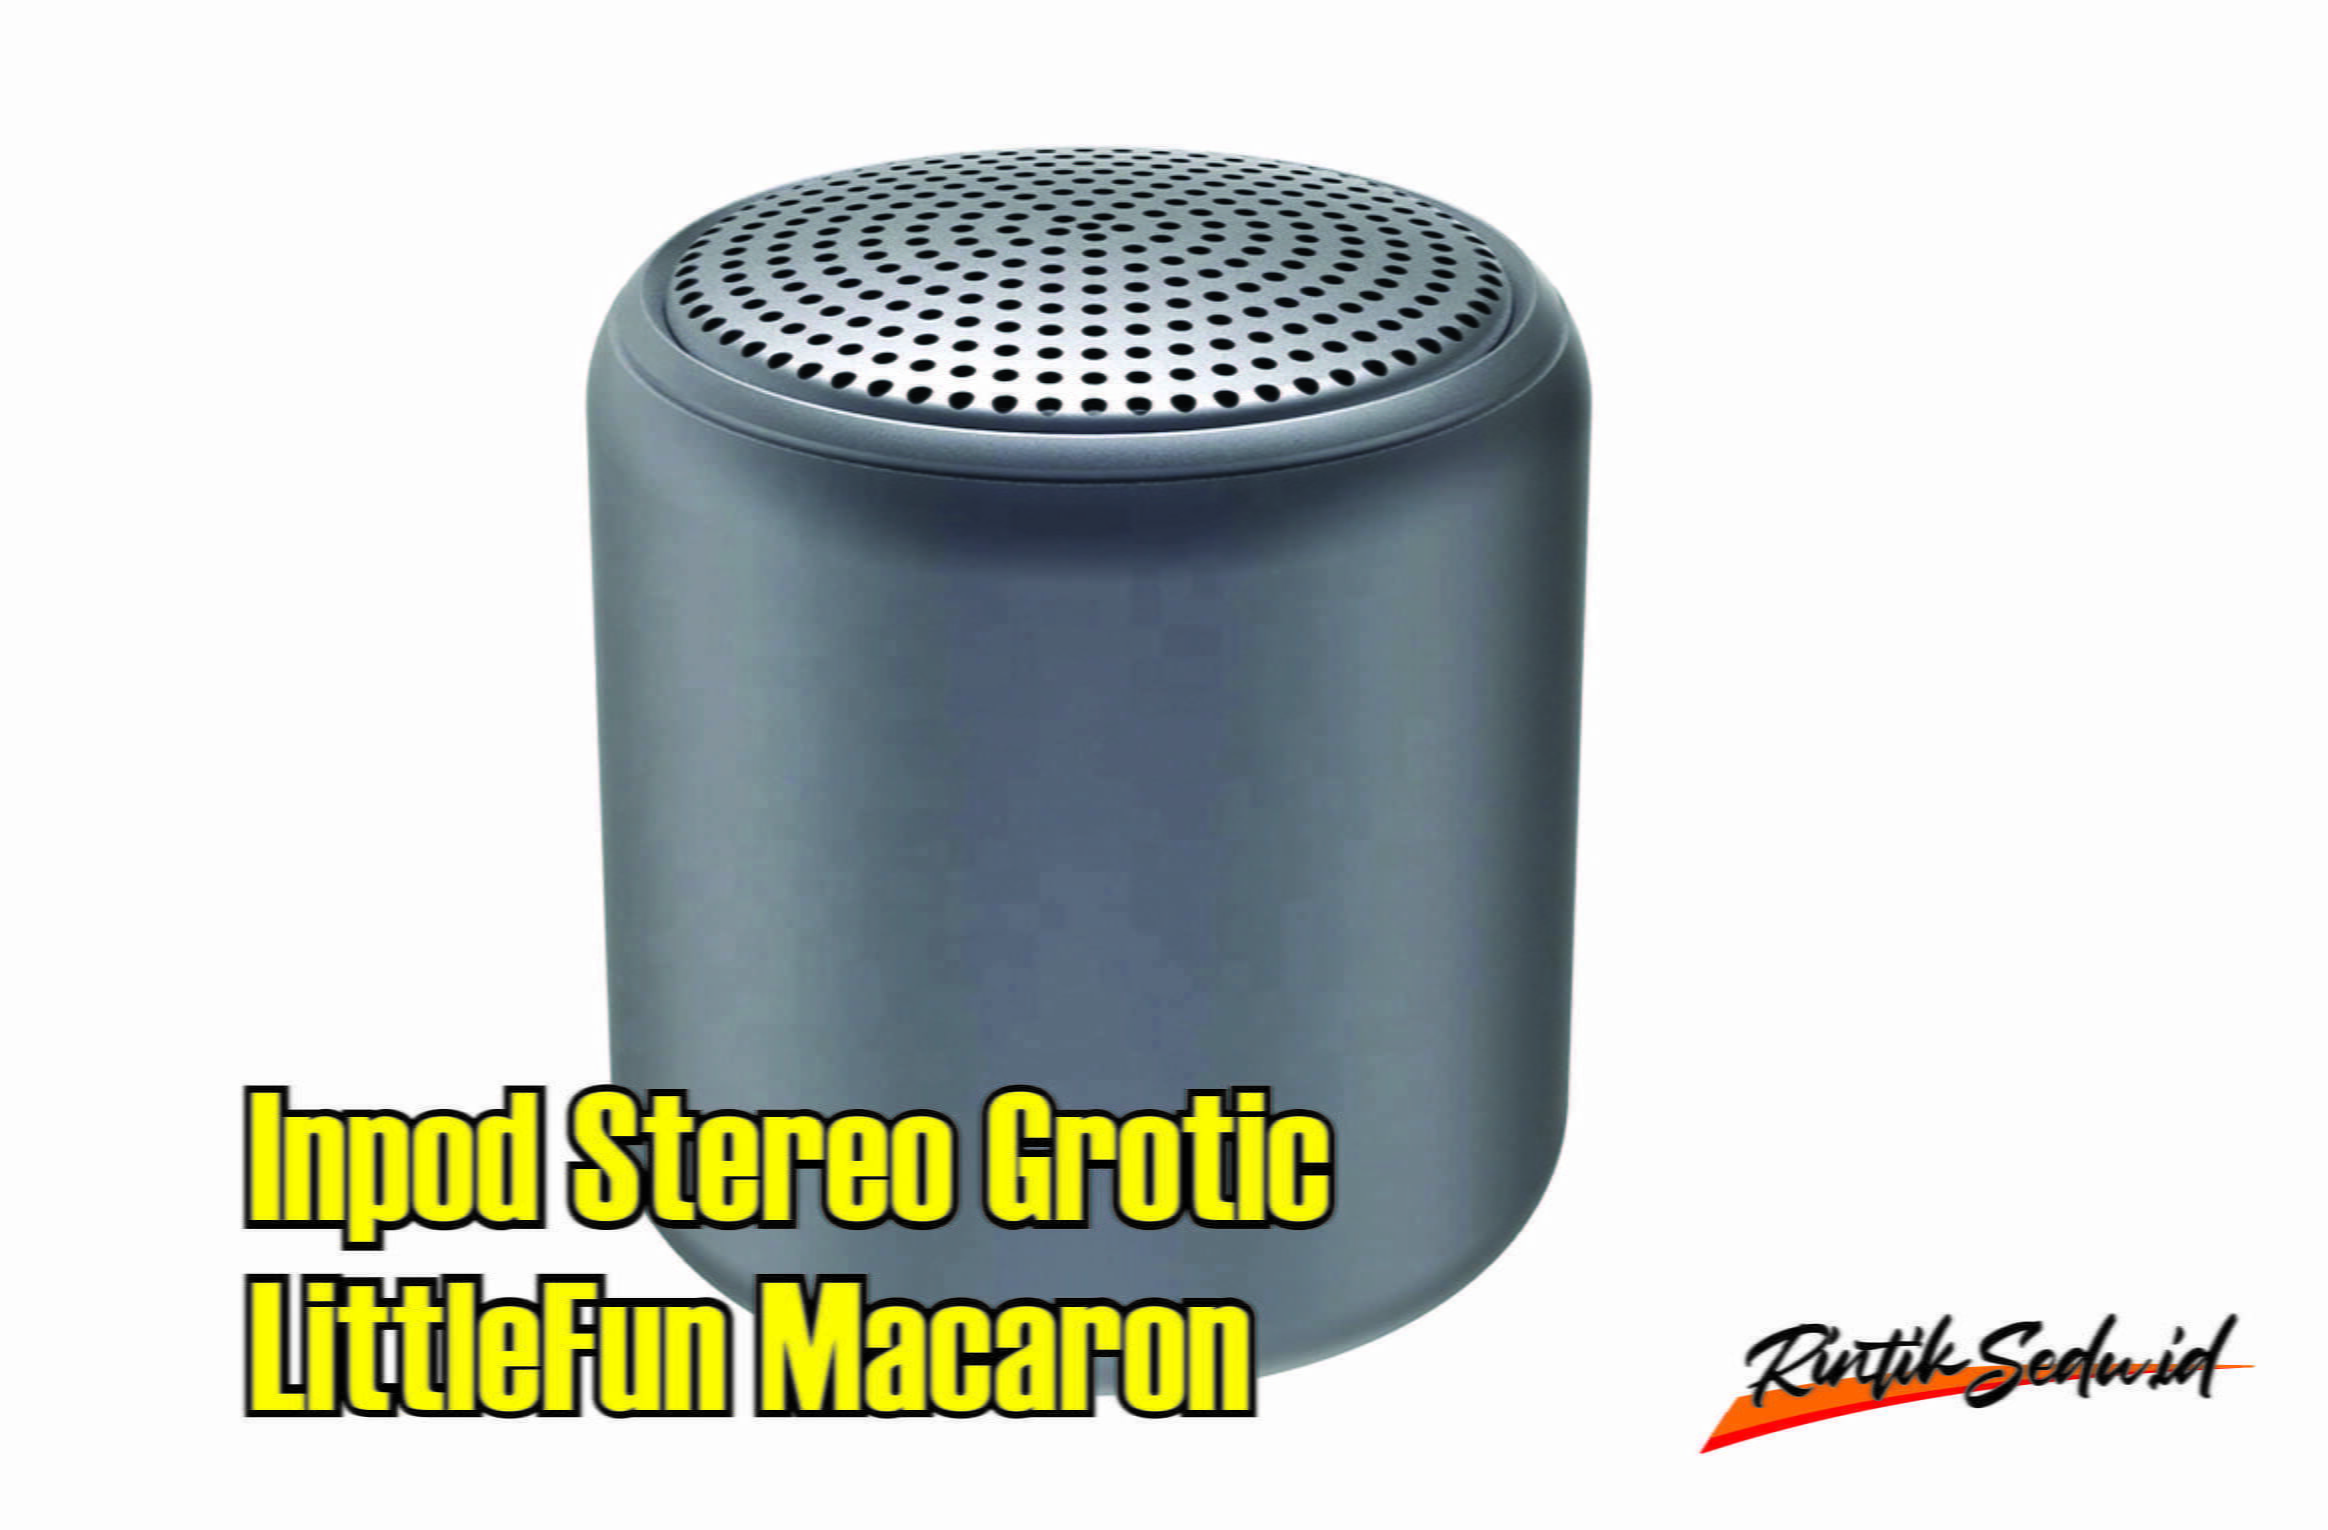 Inpod Stereo Grotic LittleFun Macaron